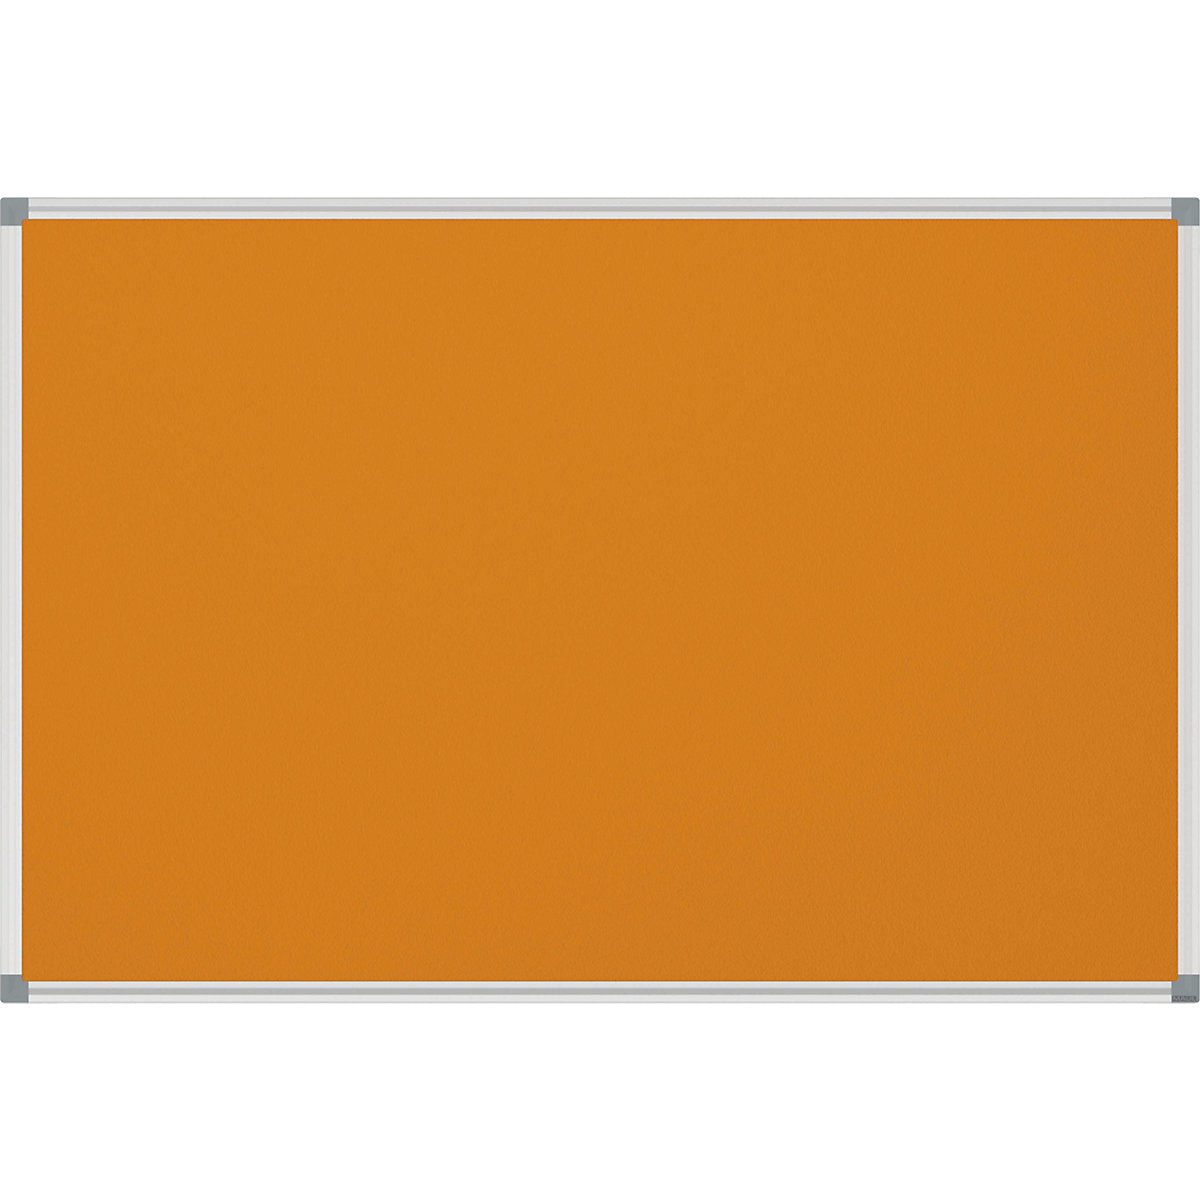 Špendlíková tabuľa STANDARD – MAUL, plstený poťah, oranžová, š x v 900 x 600 mm-2